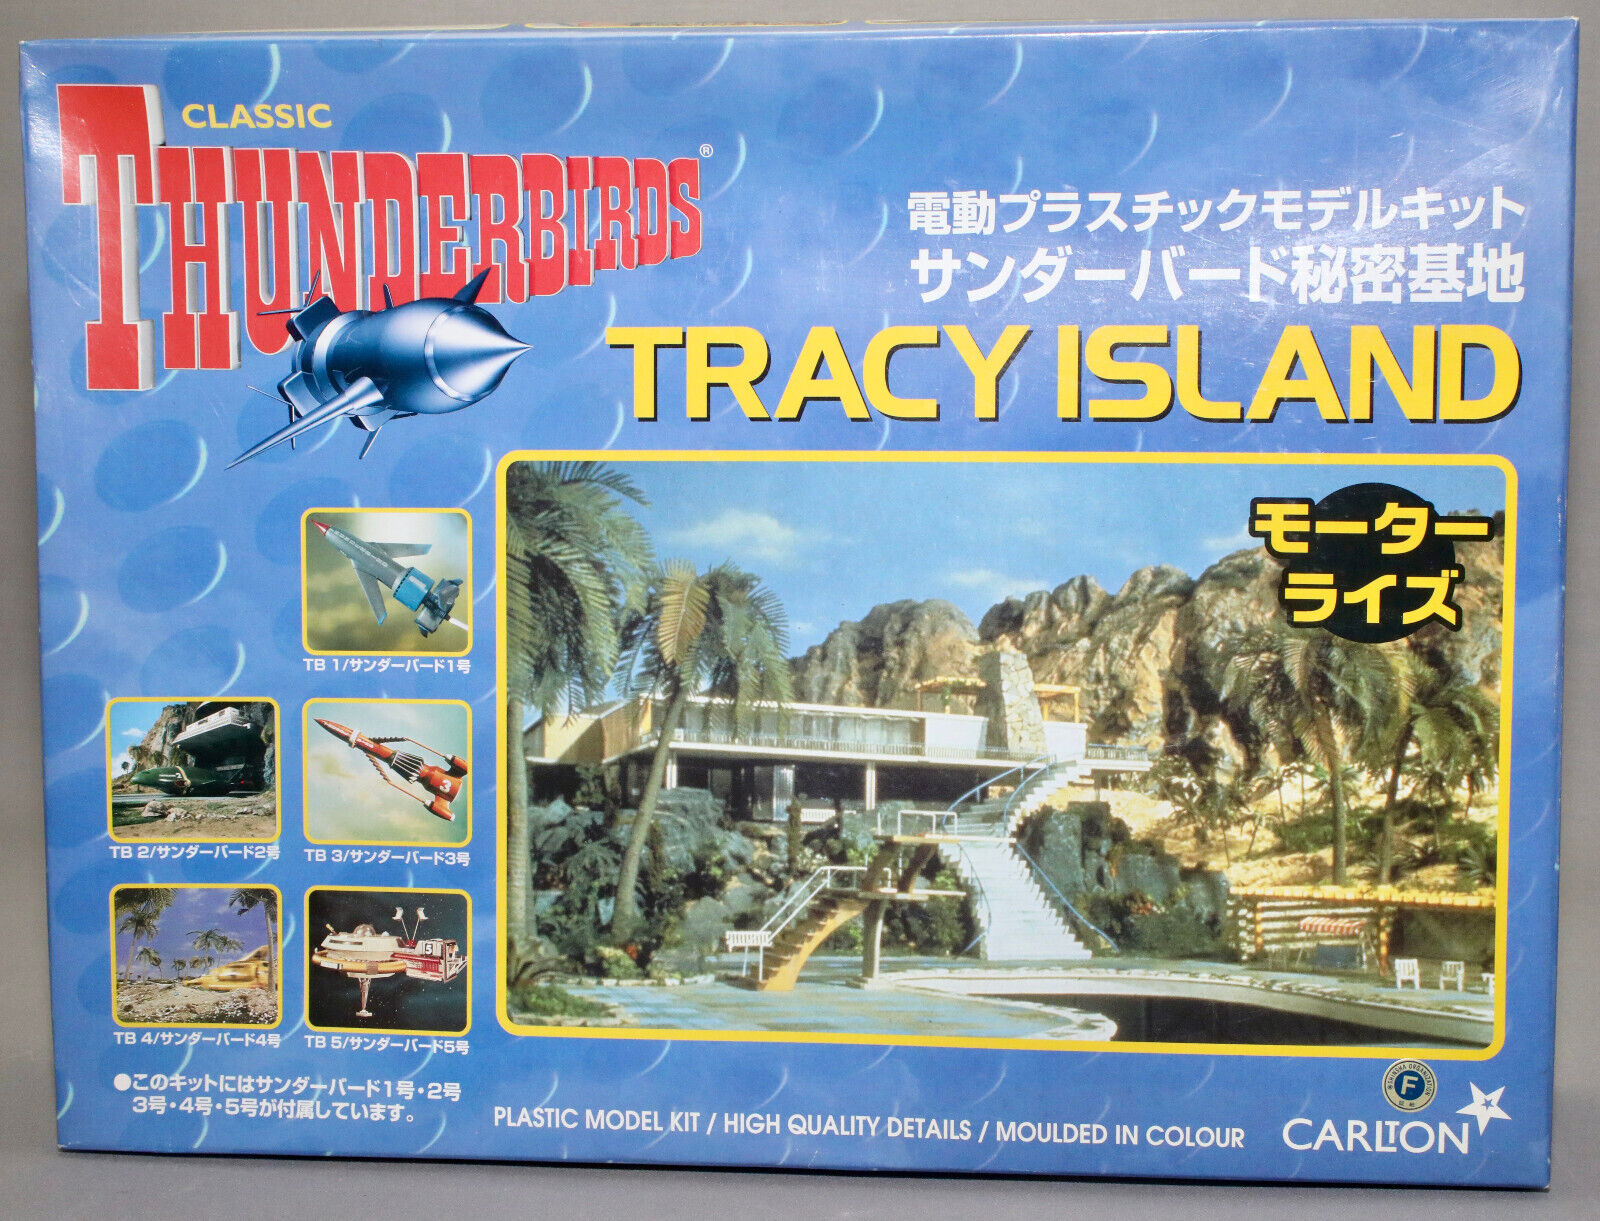 New Classic THUNDERBIRDS: TRACY ISLAND Plastic Model Kit (Imai)